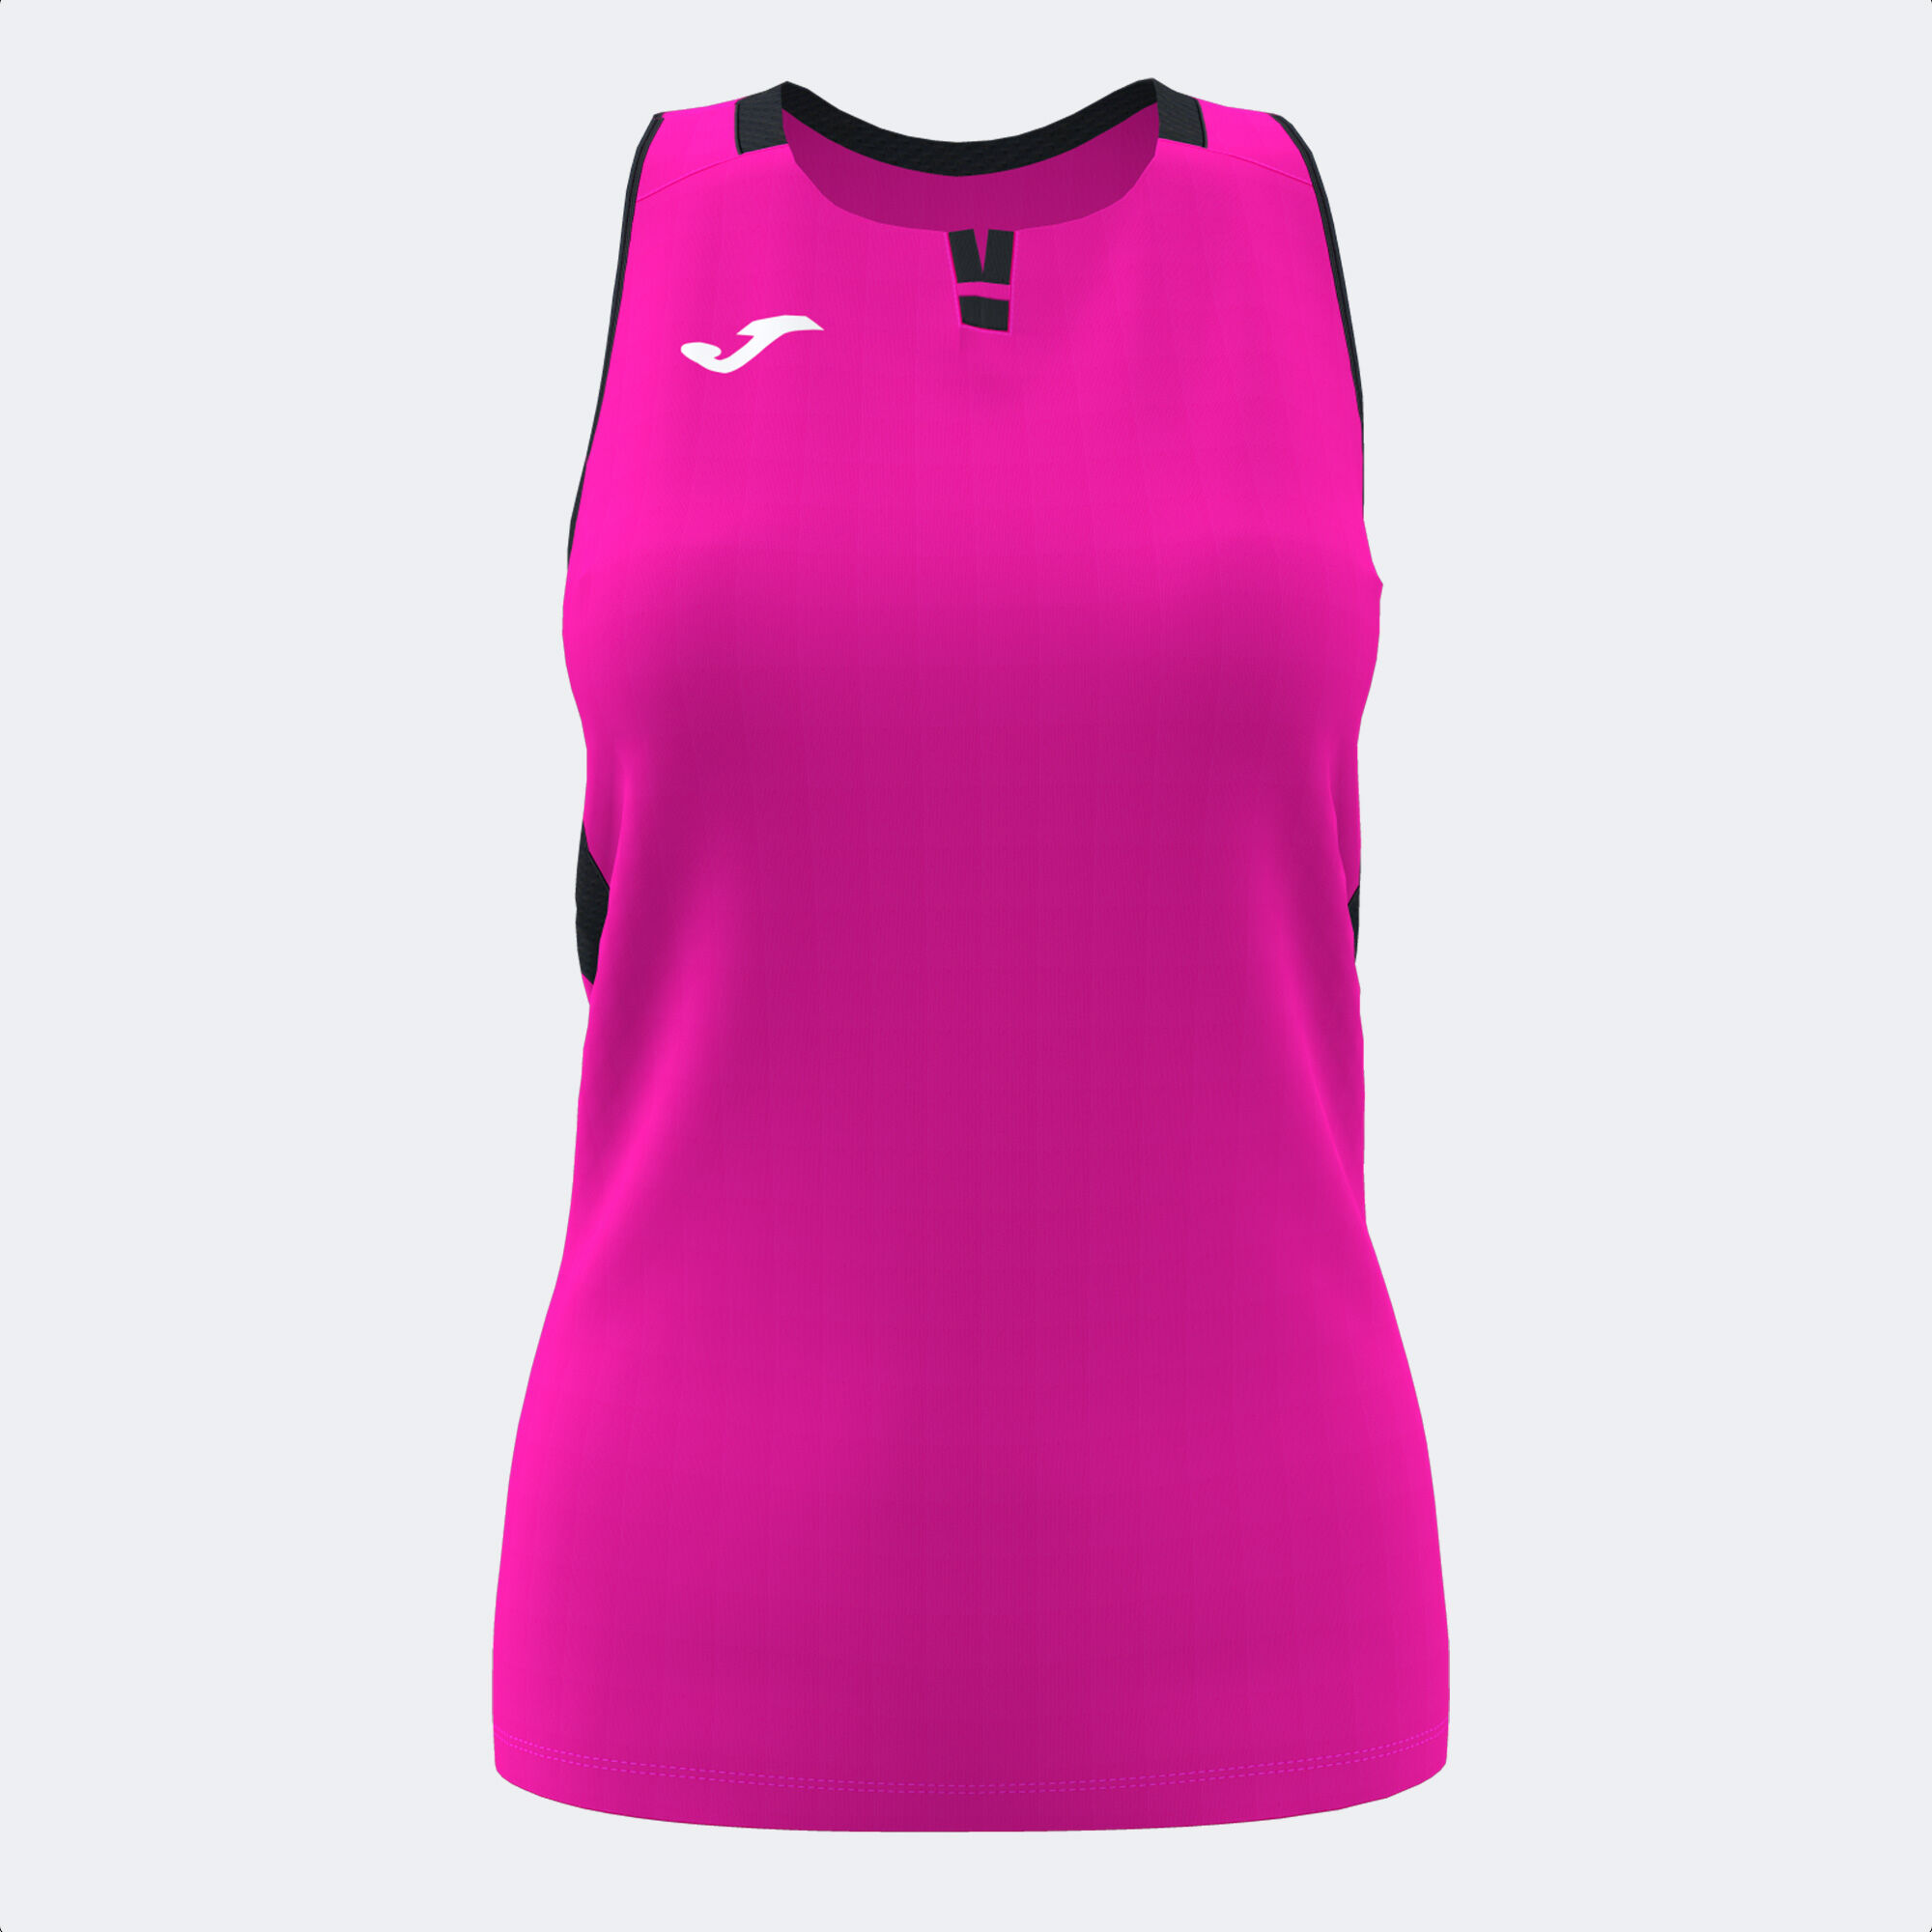 T-shirt de alça mulher Ranking rosa fluorescente preto